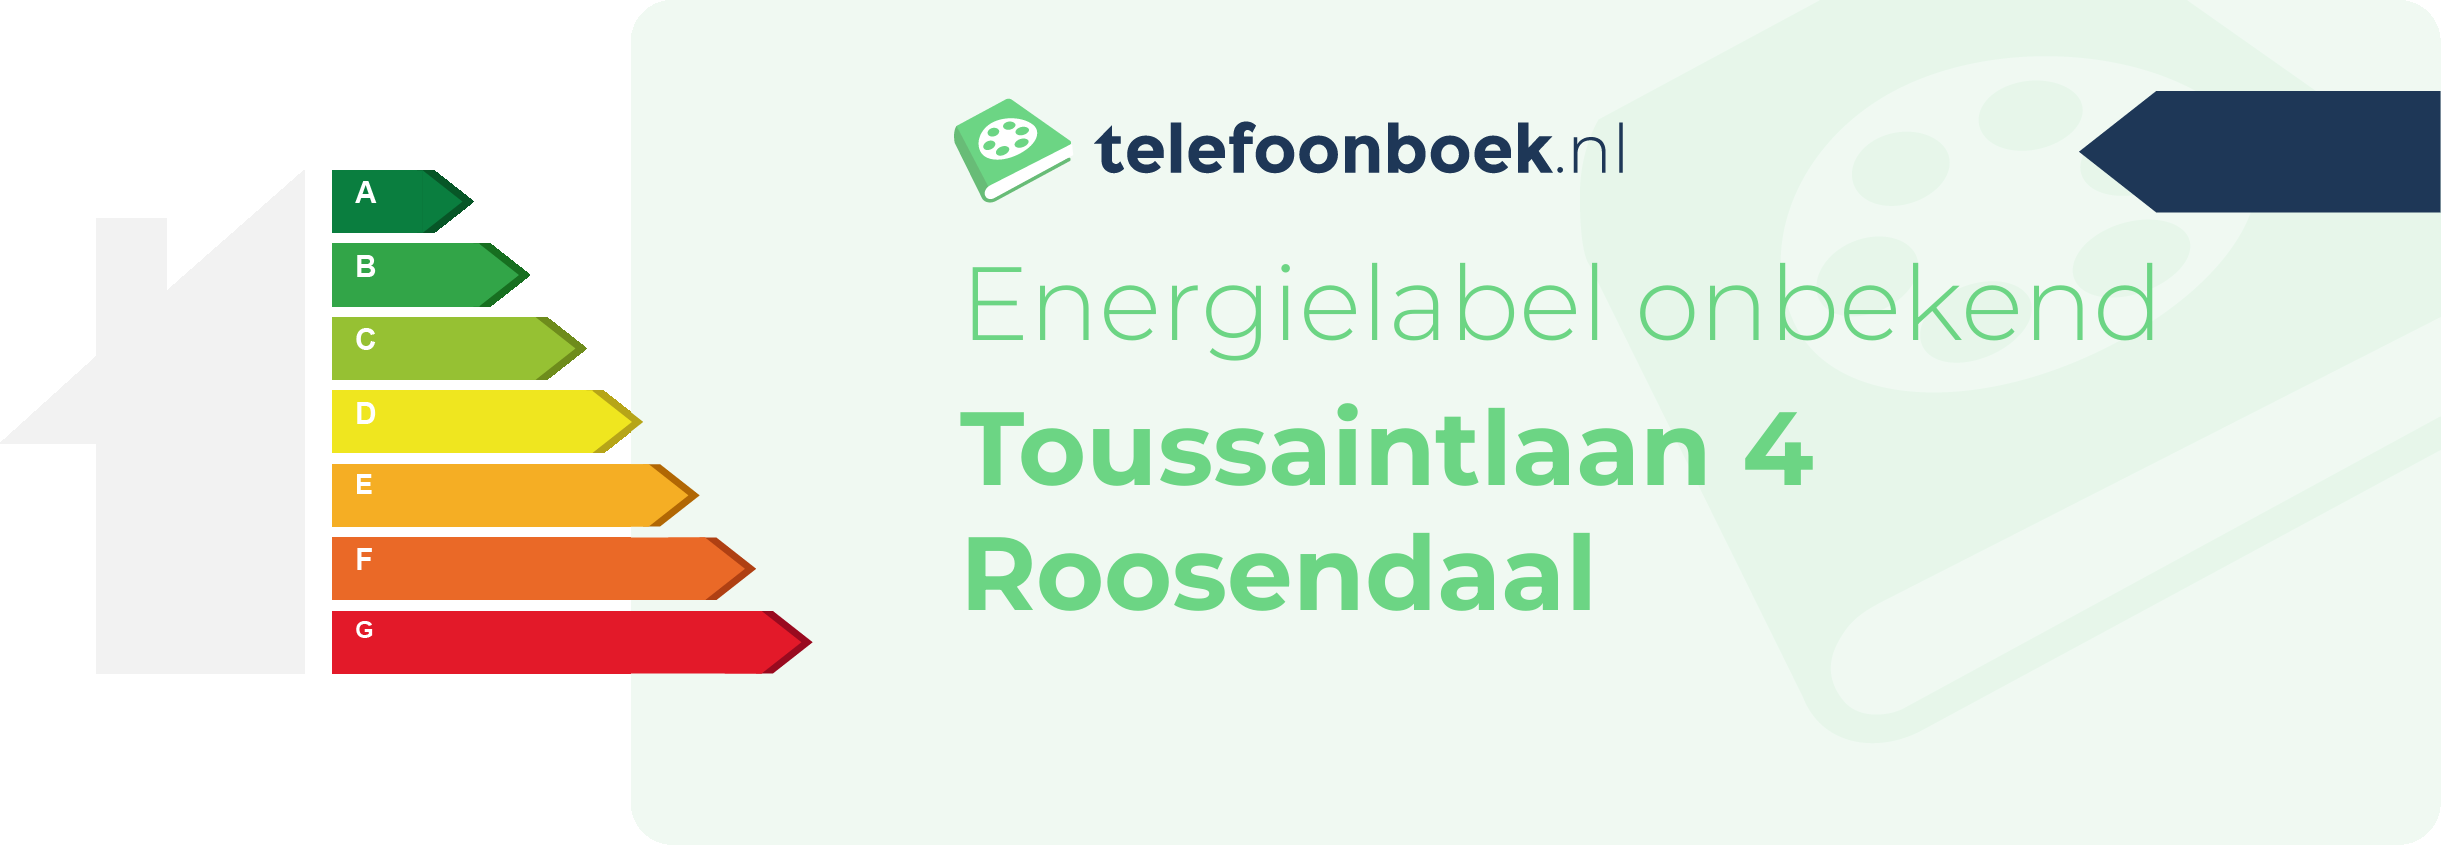 Energielabel Toussaintlaan 4 Roosendaal